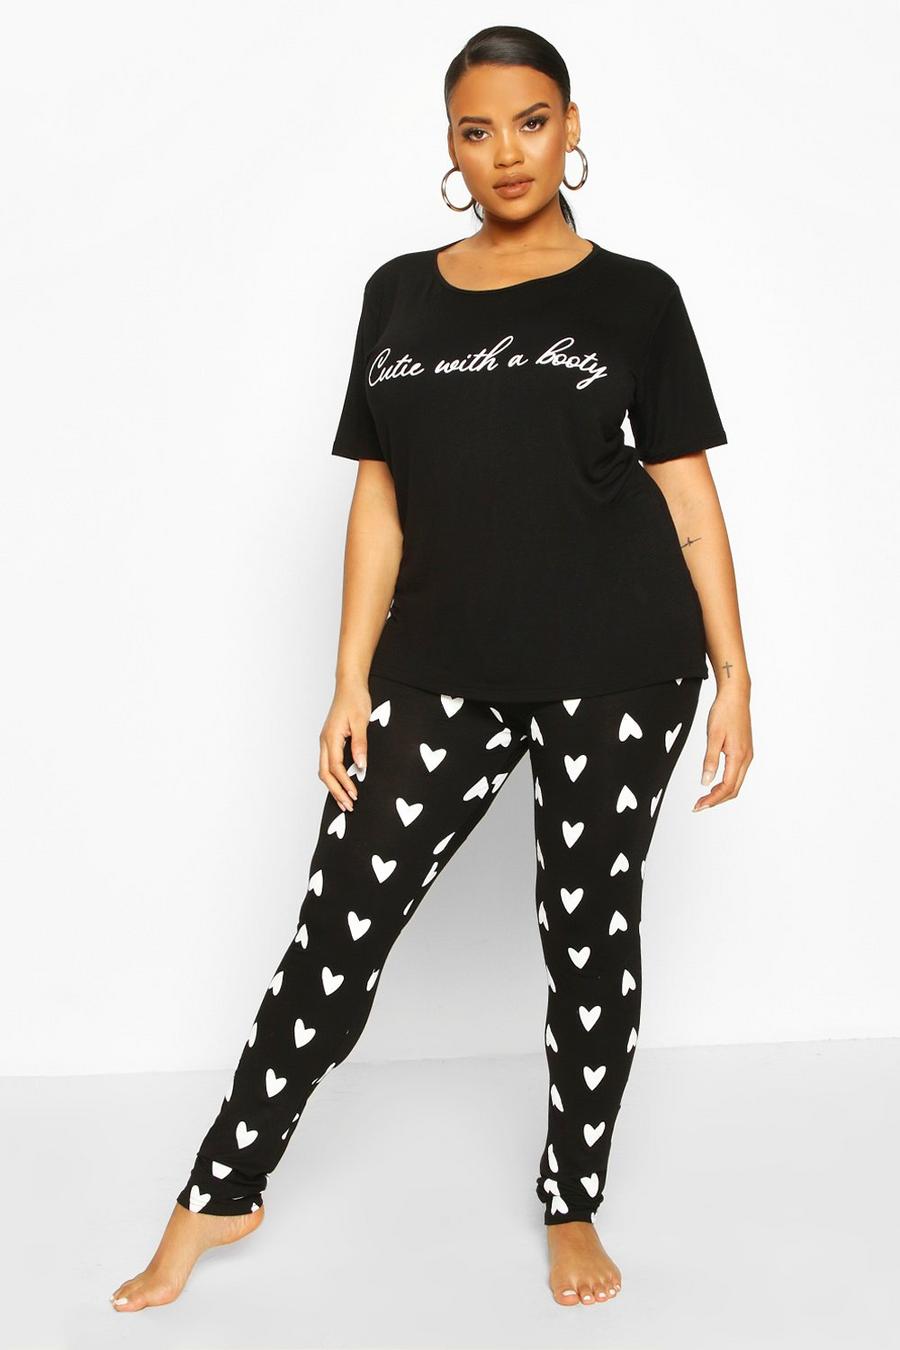 Black svart Plus 'Cutie With A Booty' Slogan Top & Heart Print Trousers Pyjama Set